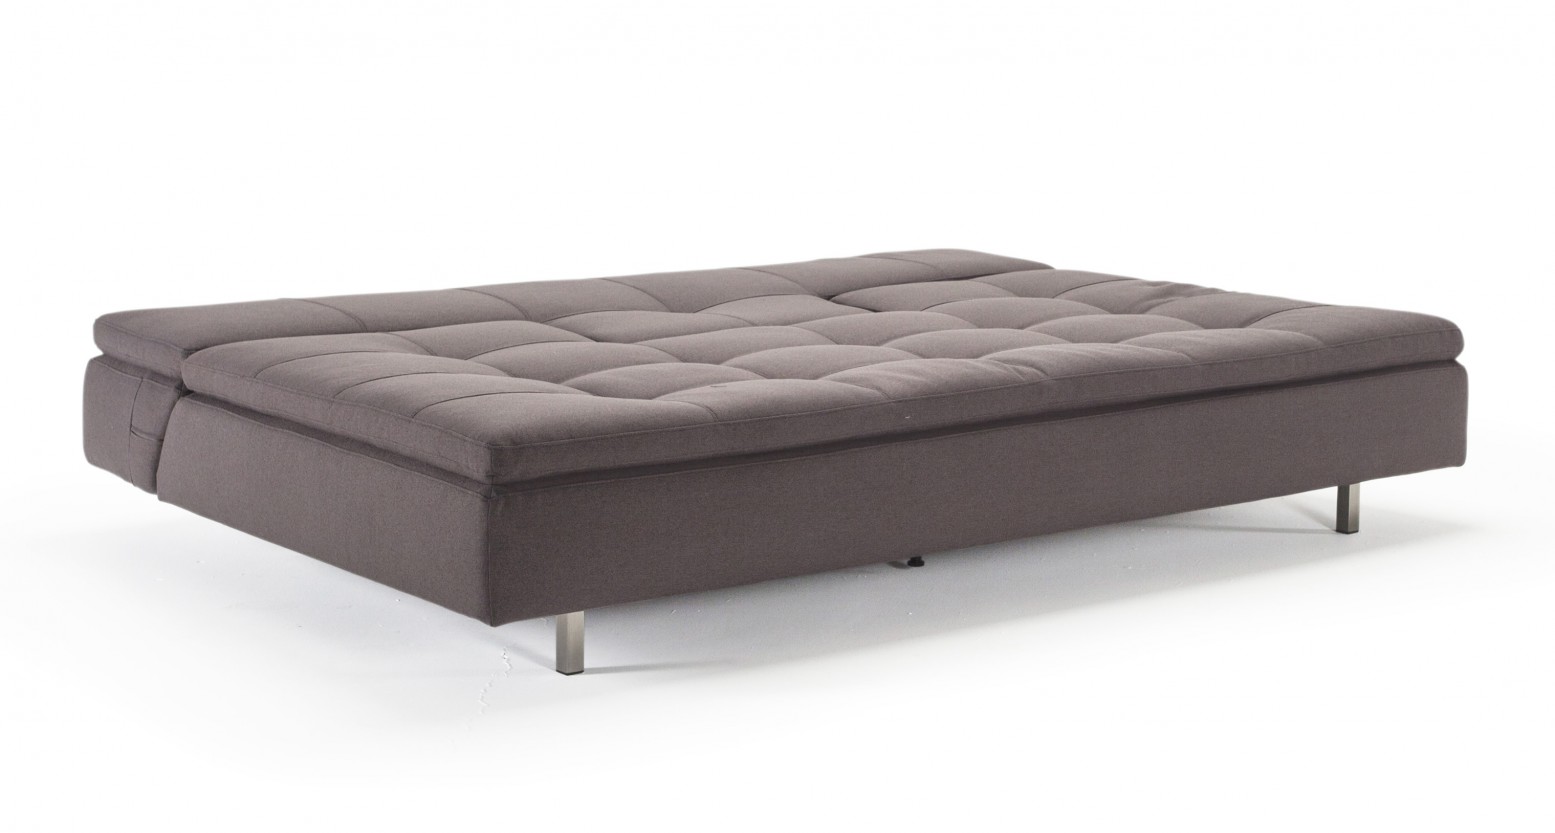 6 foot long sofa bed